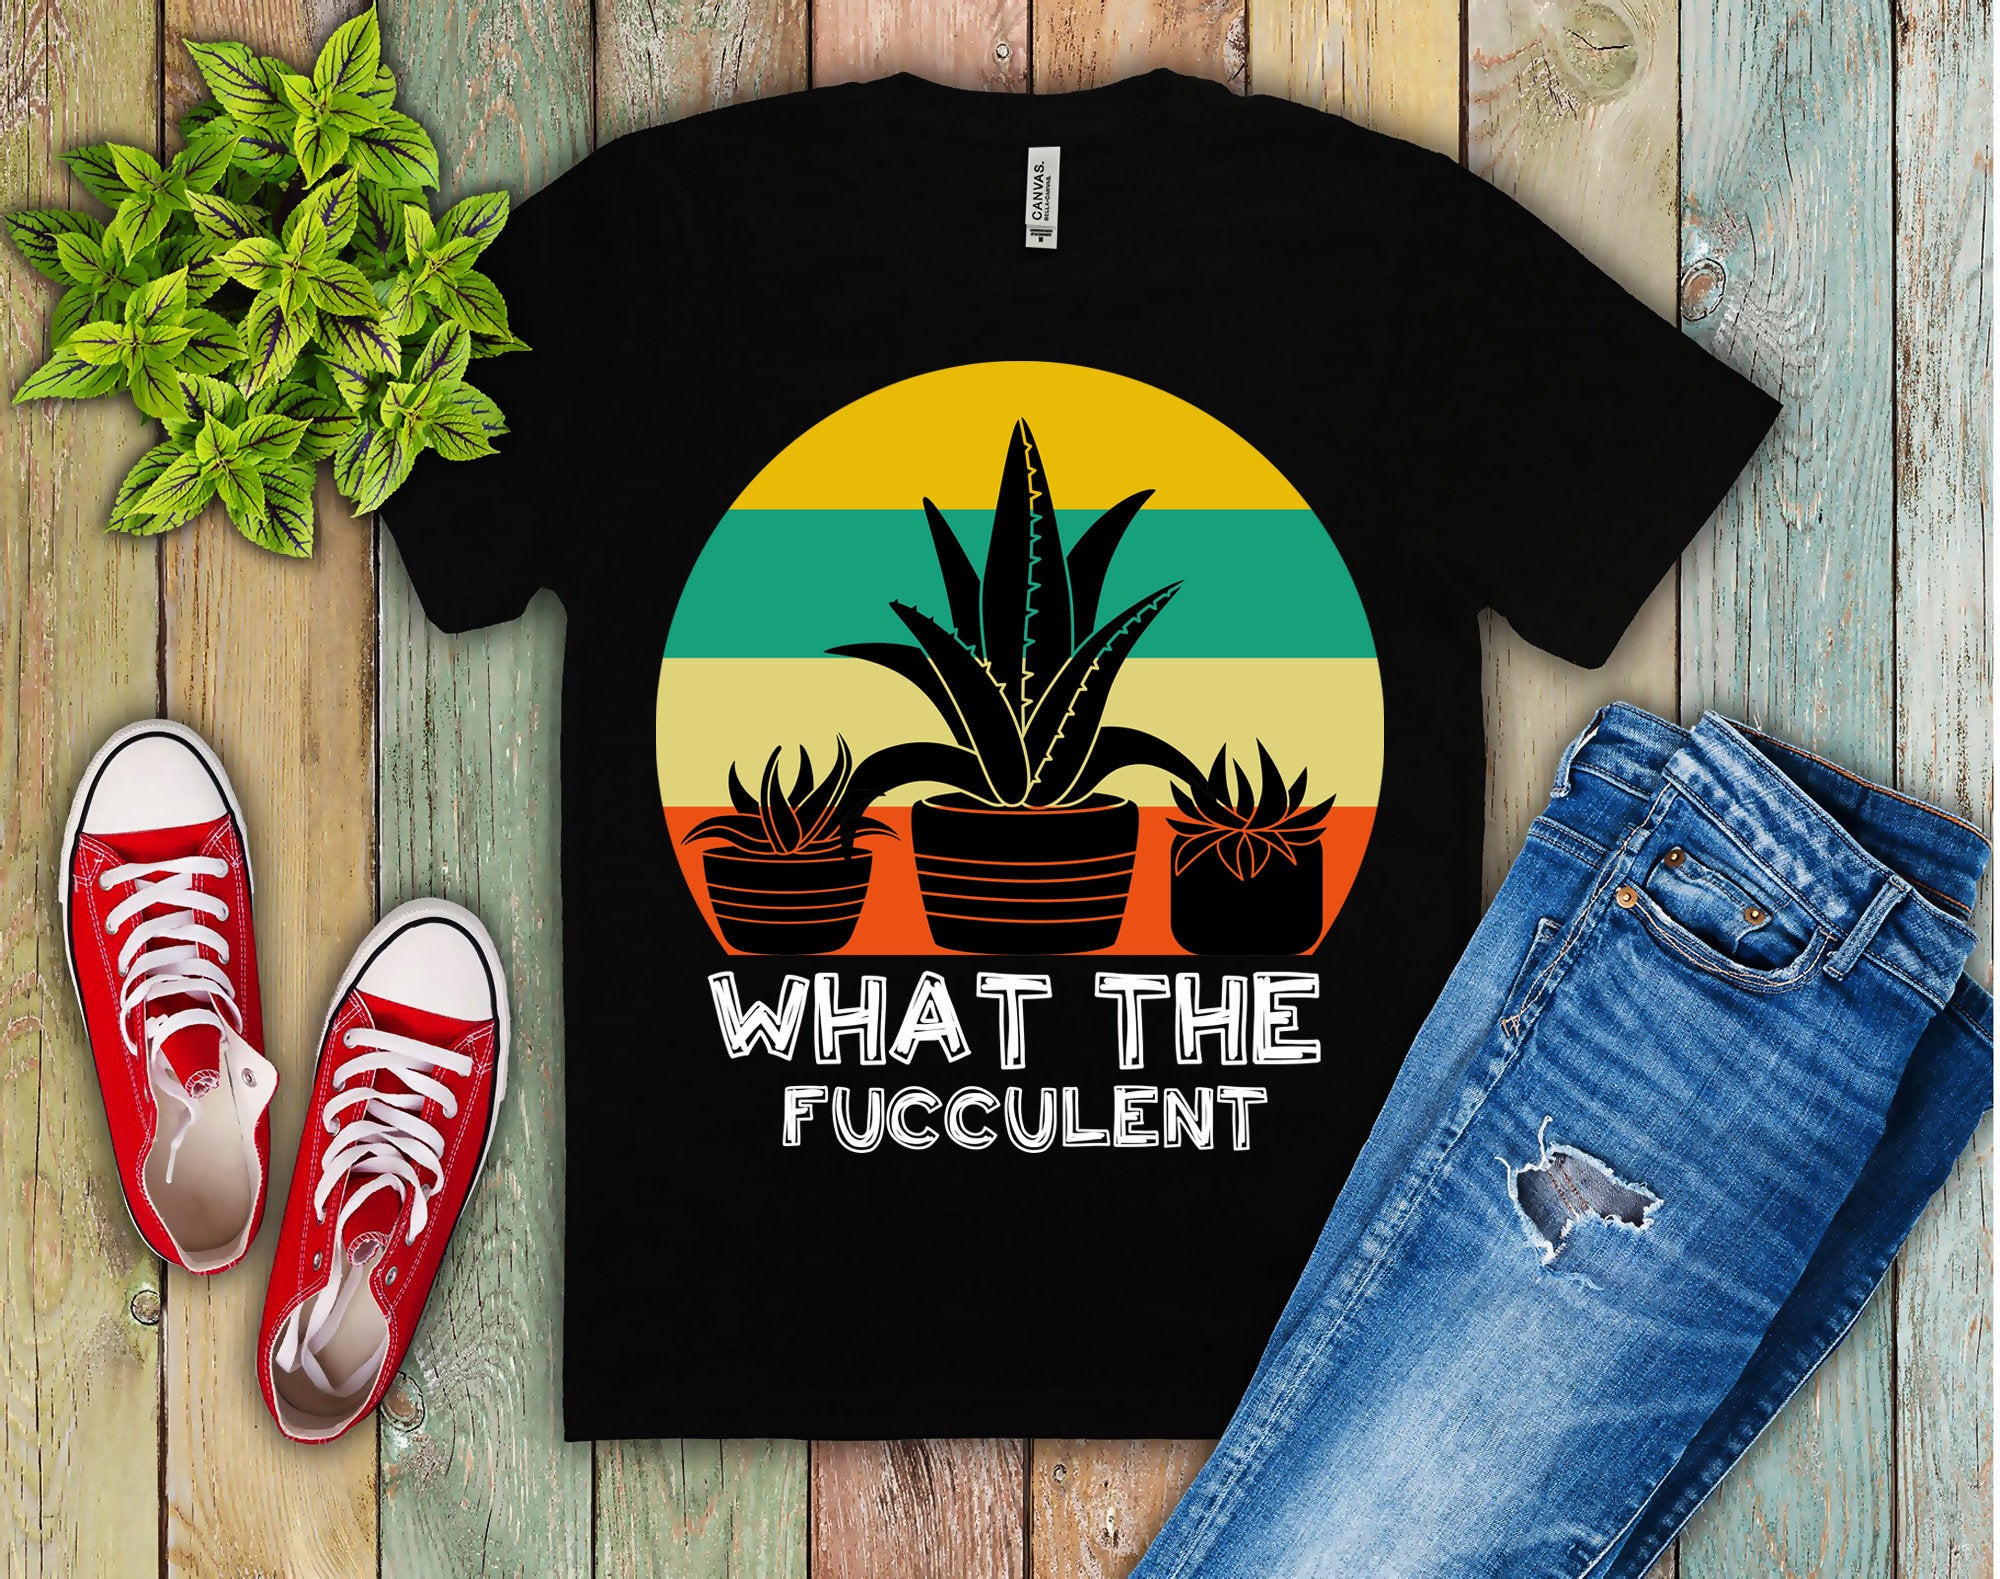 Qué El Fuculento | Camisetas retro de atardecer, camiseta de la fuculenta, camiseta de jardinería, camiseta de suculentas, regalo de jardinería de plantas, camiseta de cactus - plusminusco.com